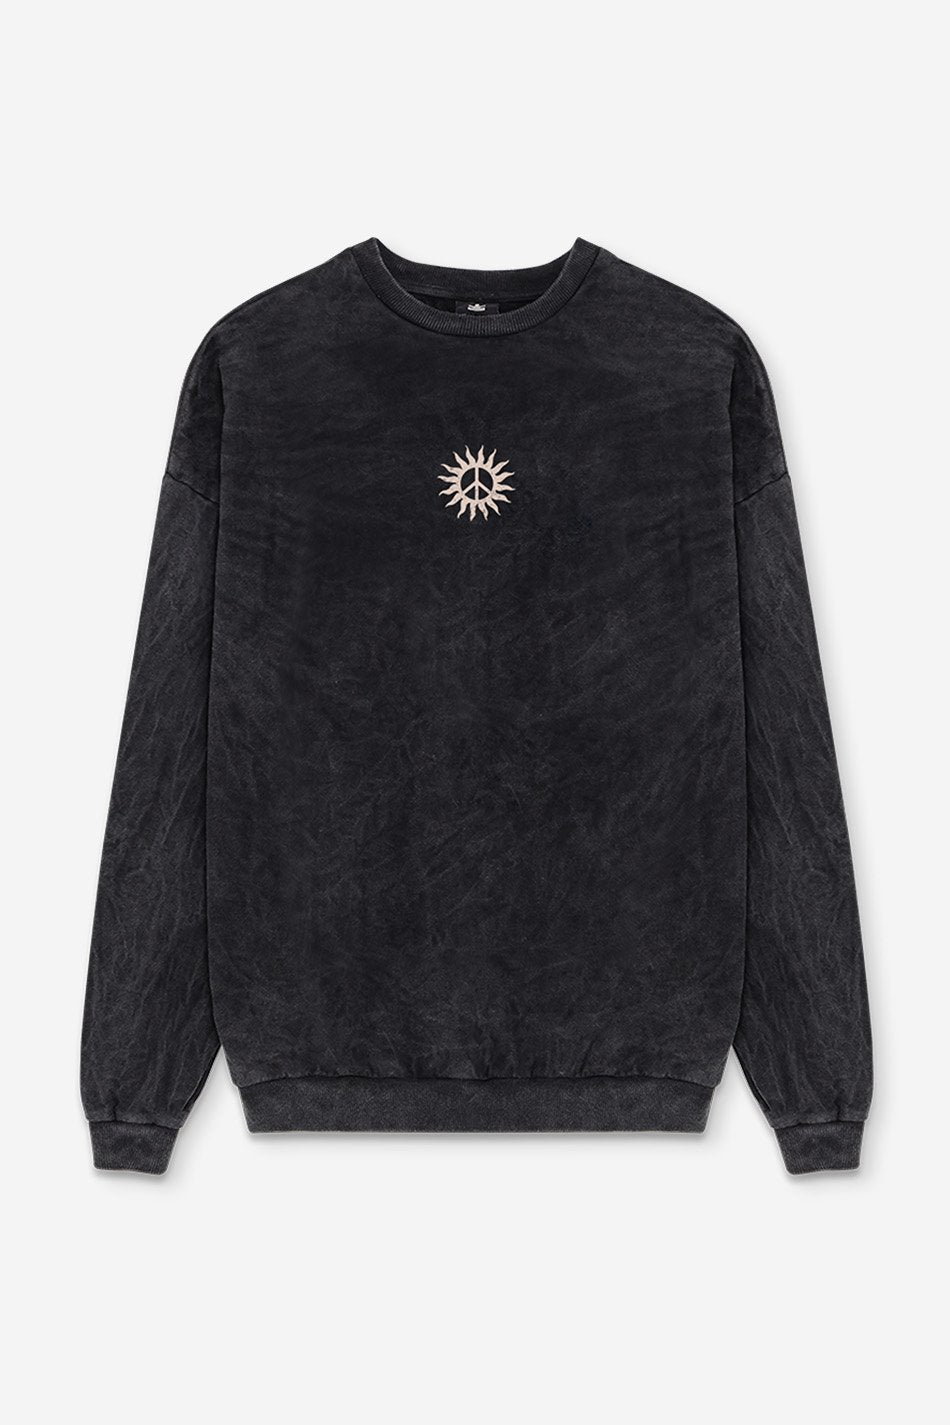 Washed Celestial Disorder Black Sweatshirt